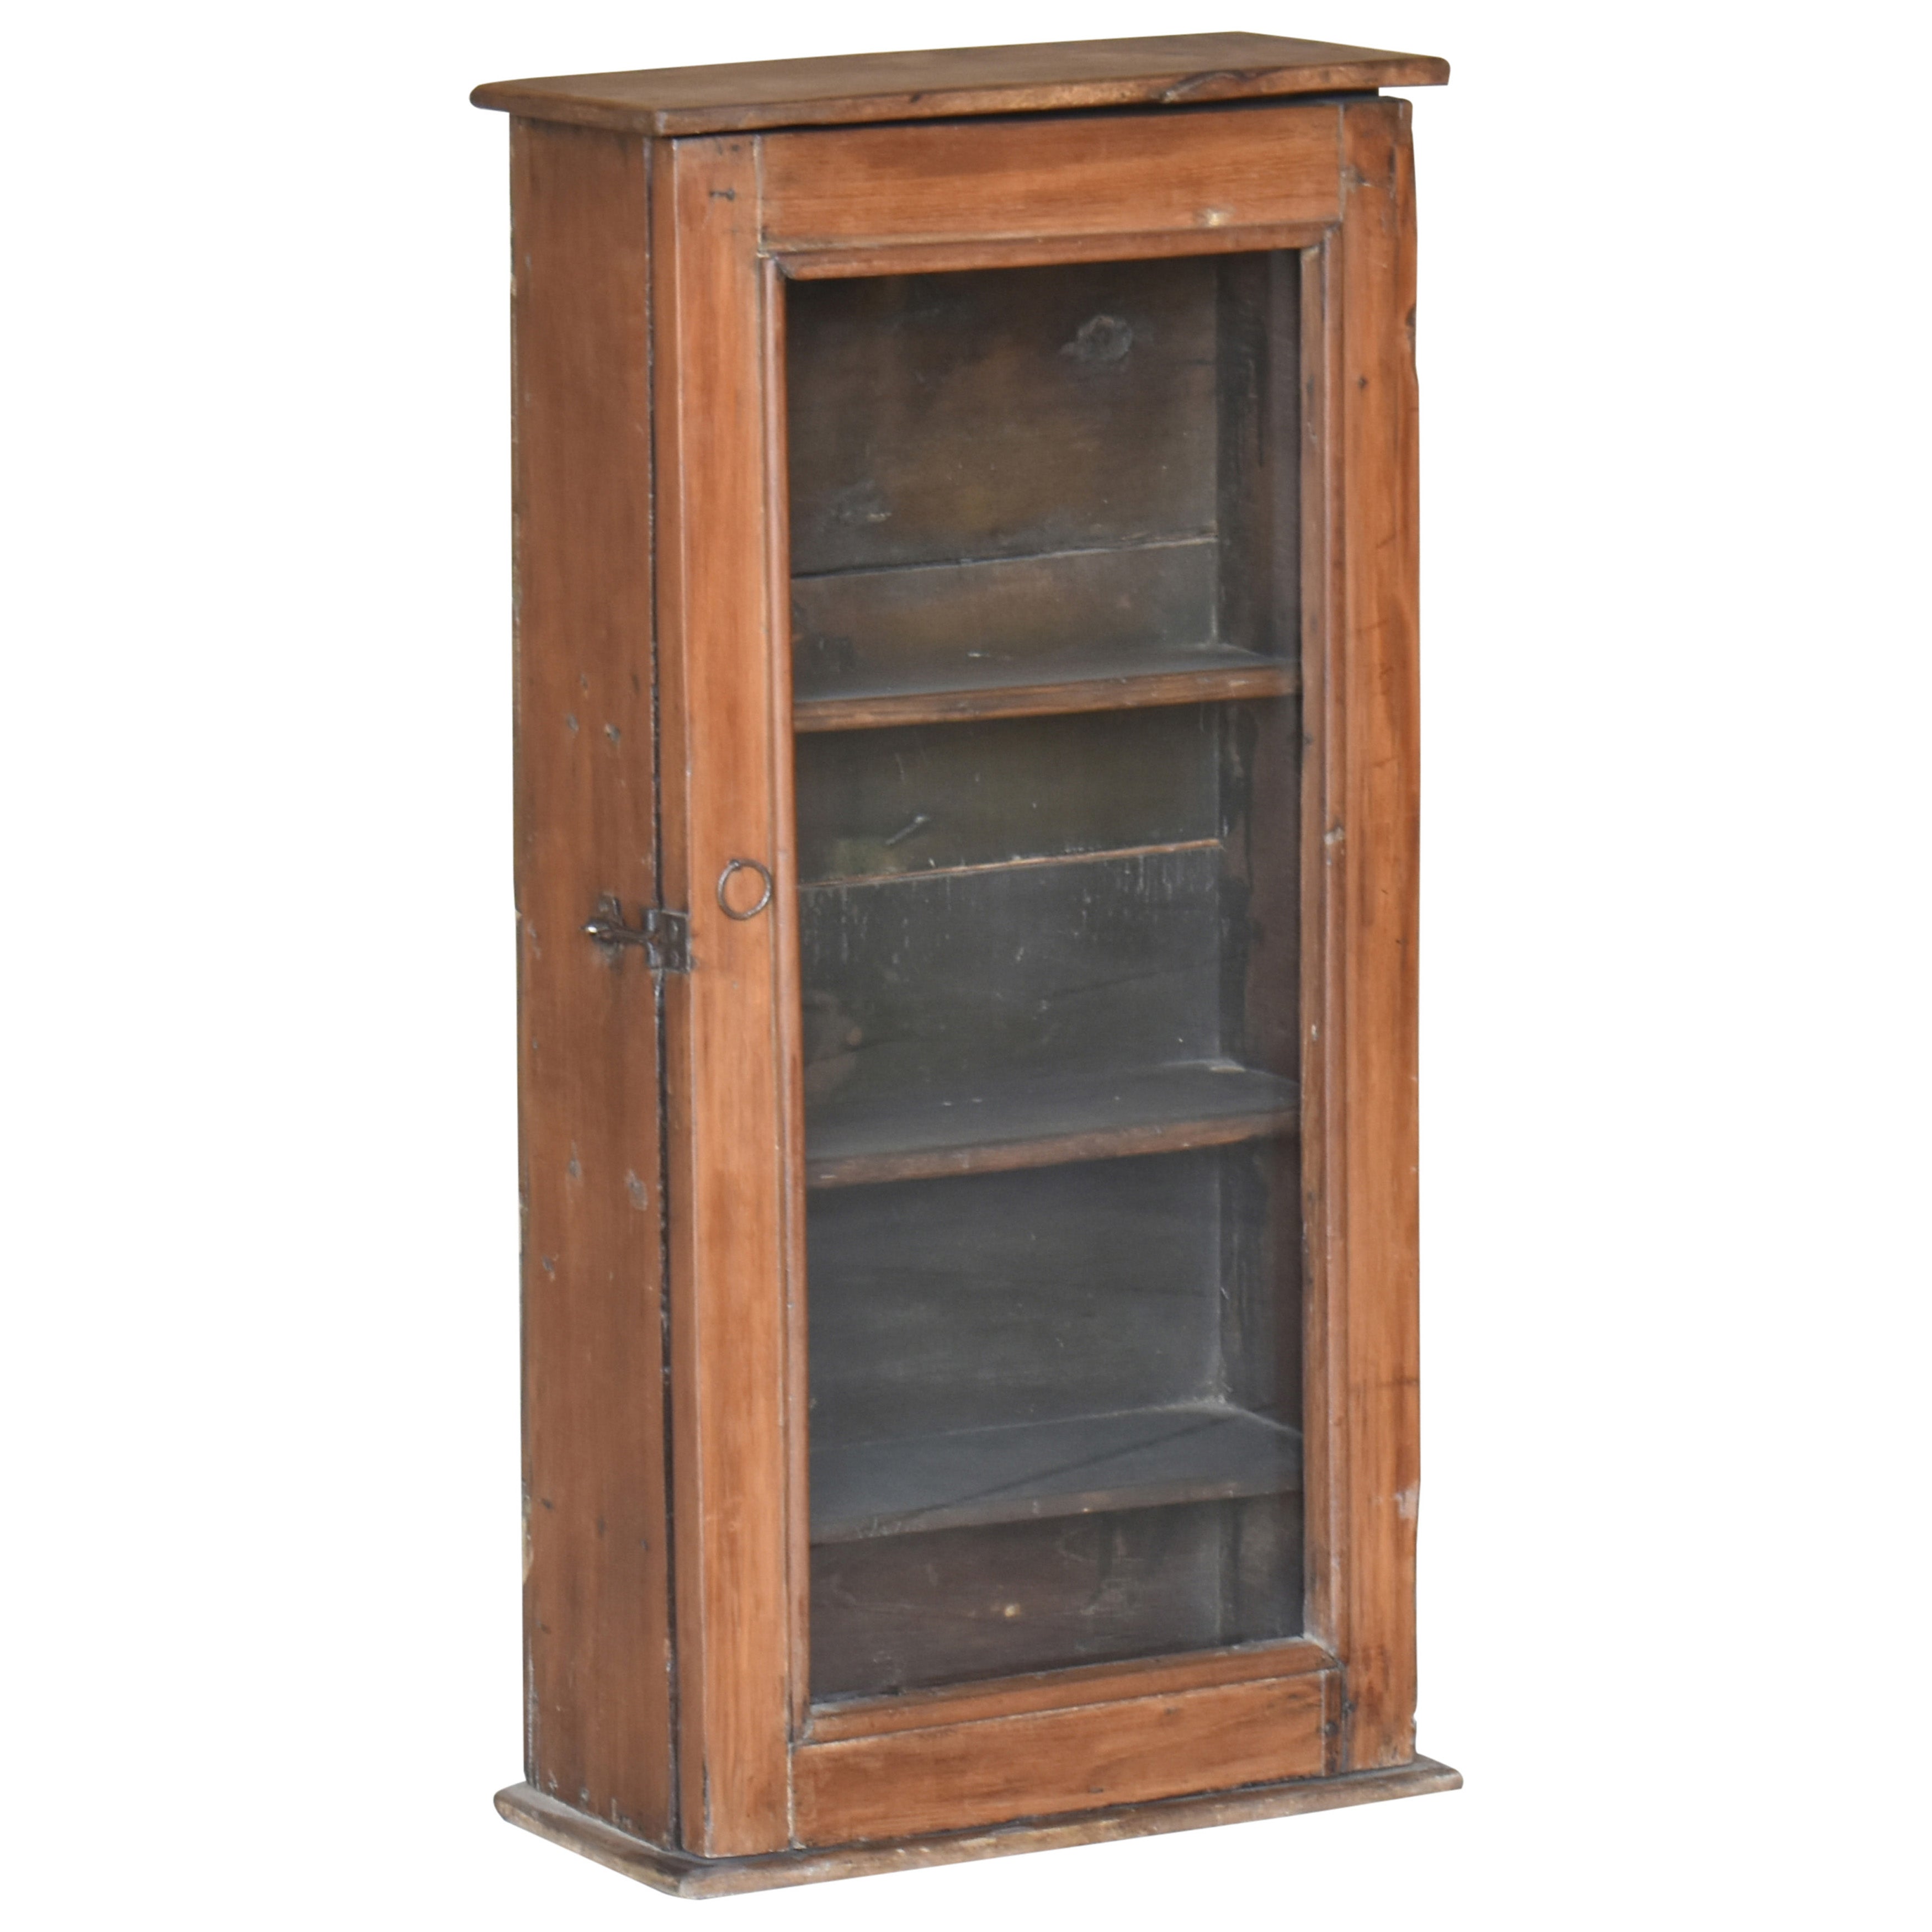 Antique Medicine Cabinet - What A Room